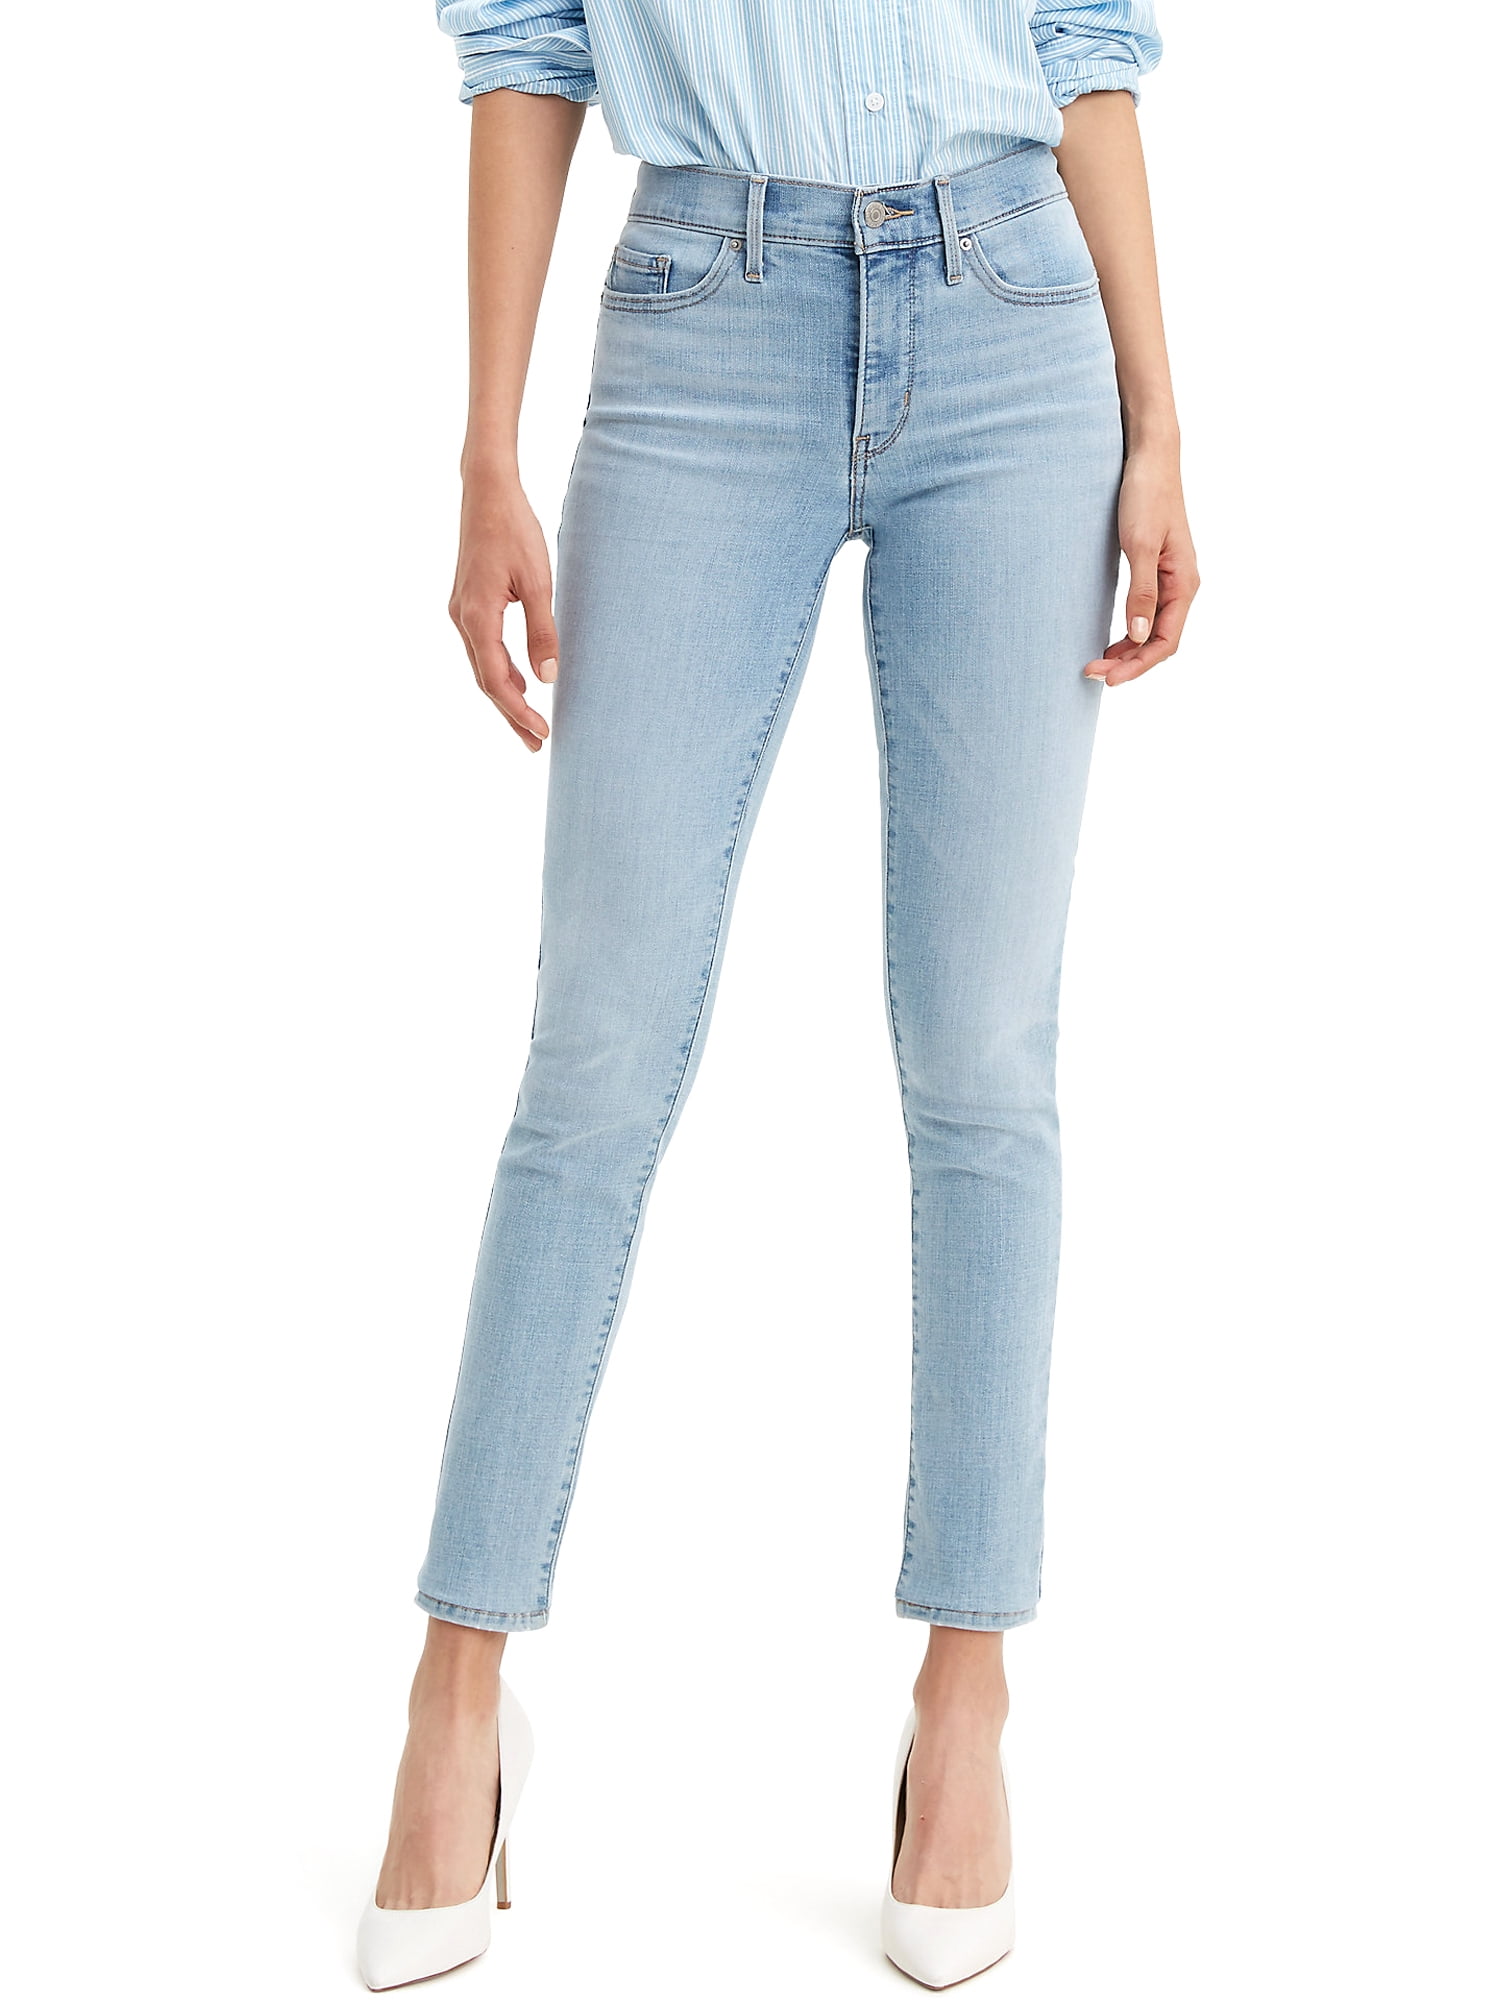 Levi’s Original Red Tab Women's 311 Shaping Skinny Jeans - Walmart.com